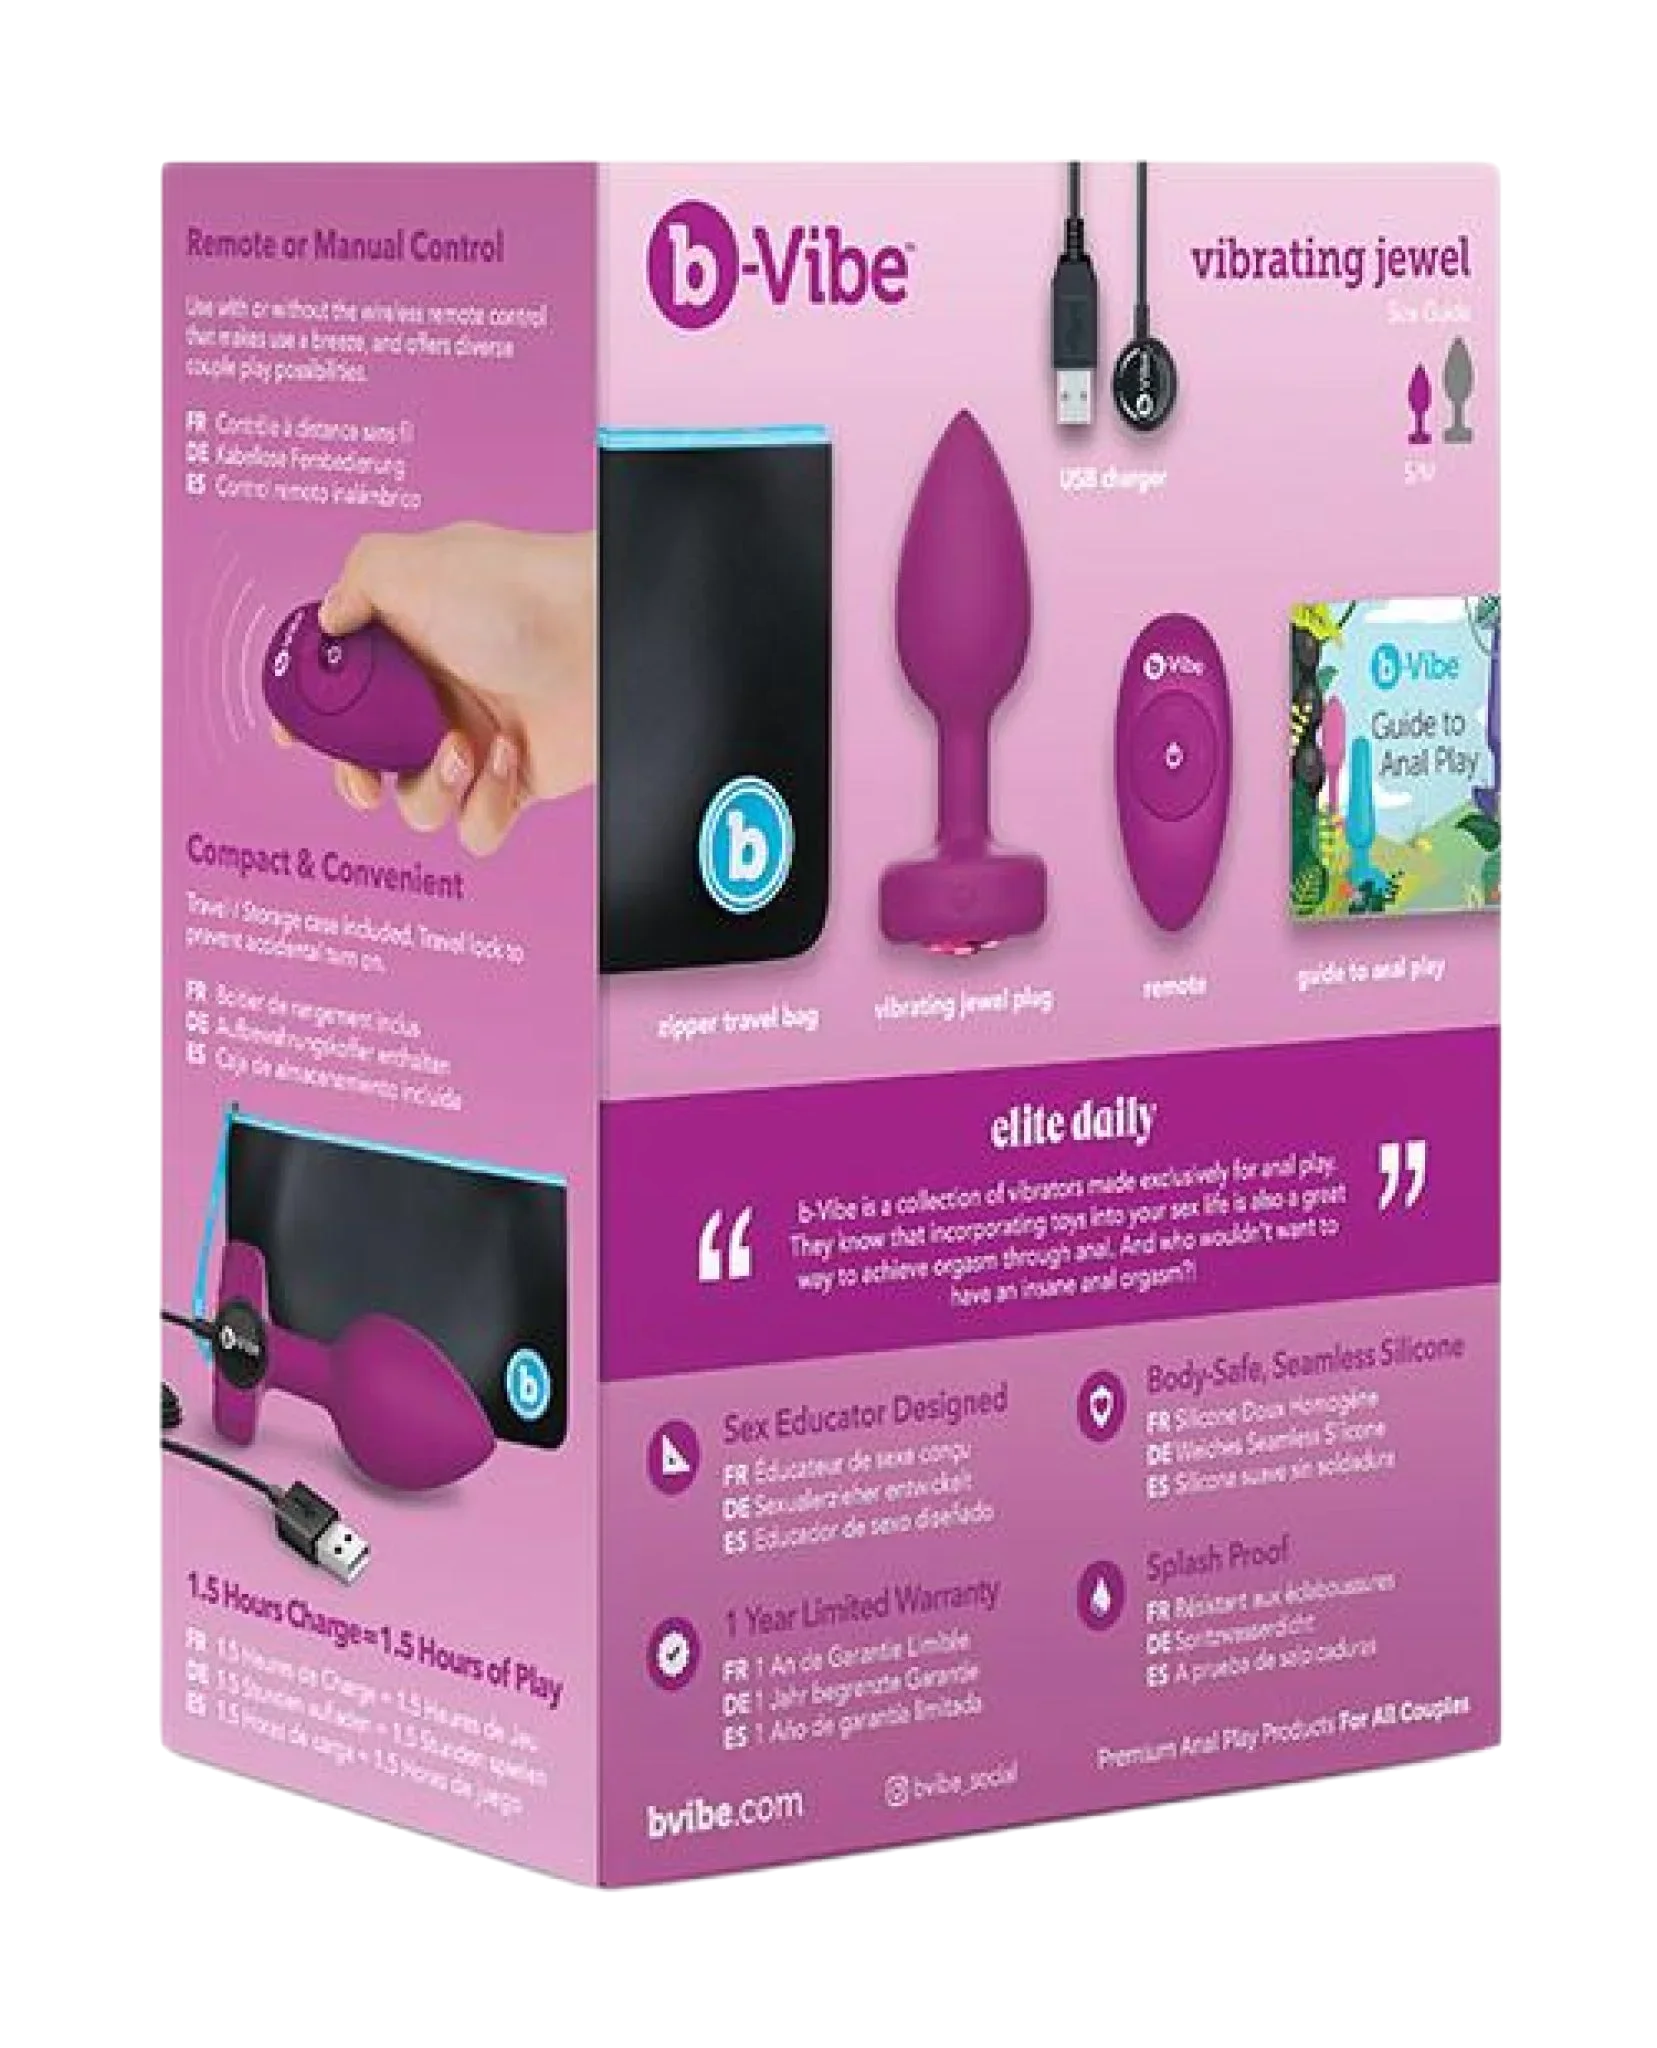 B-vibe Remote Control Vibrating Jewels B-vibe